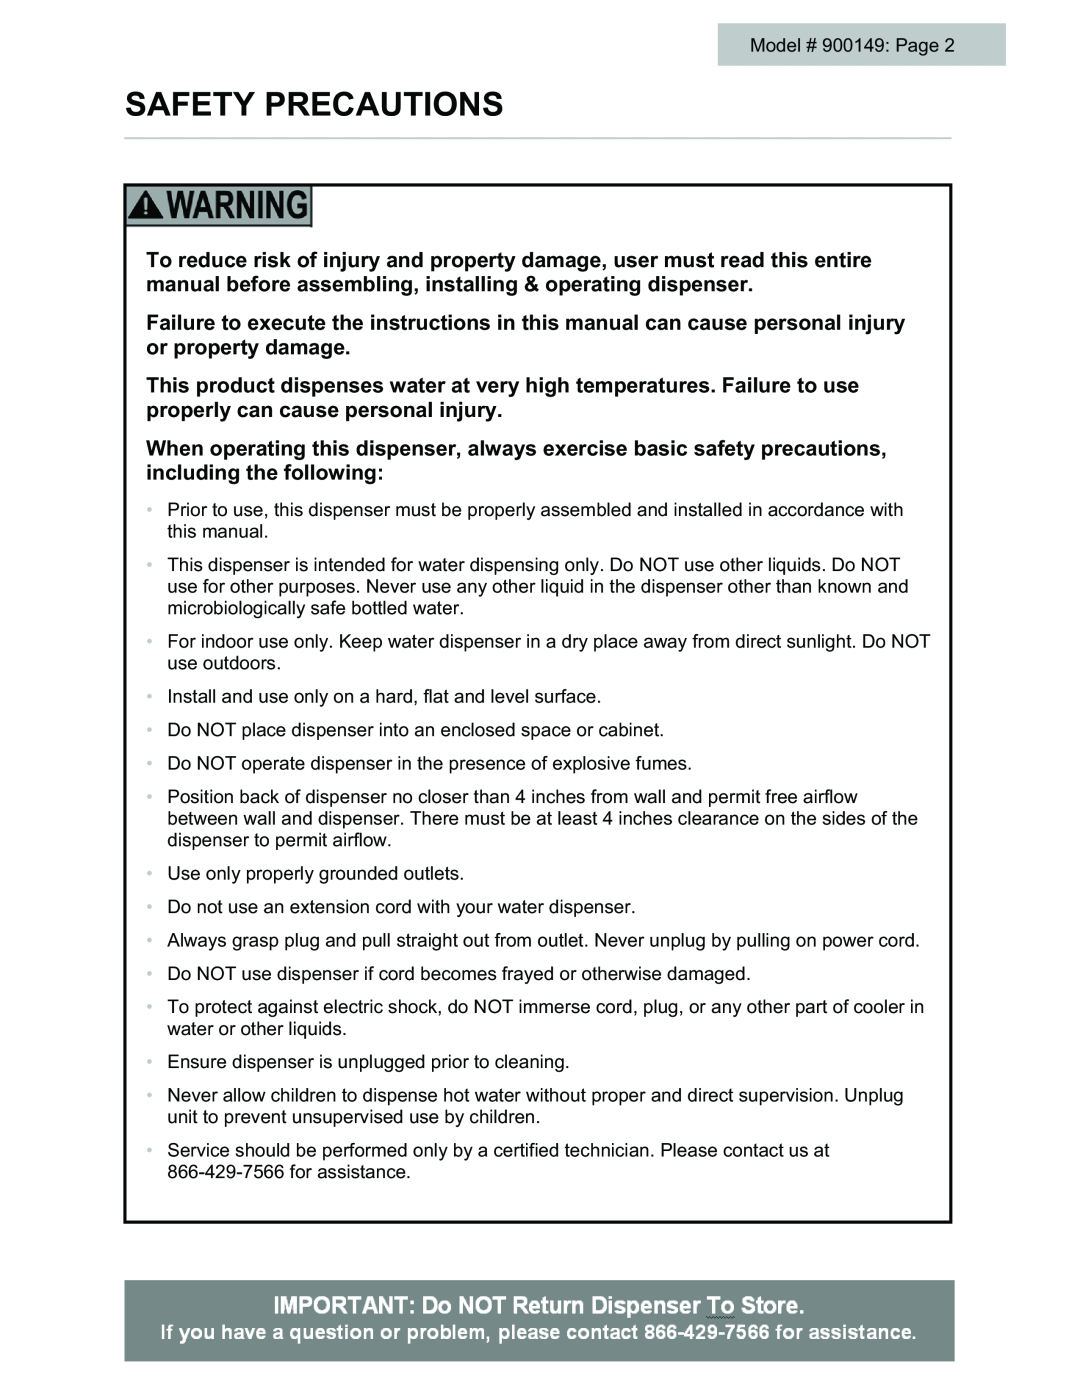 Black & Decker # 900149 user manual Safety Precautions 